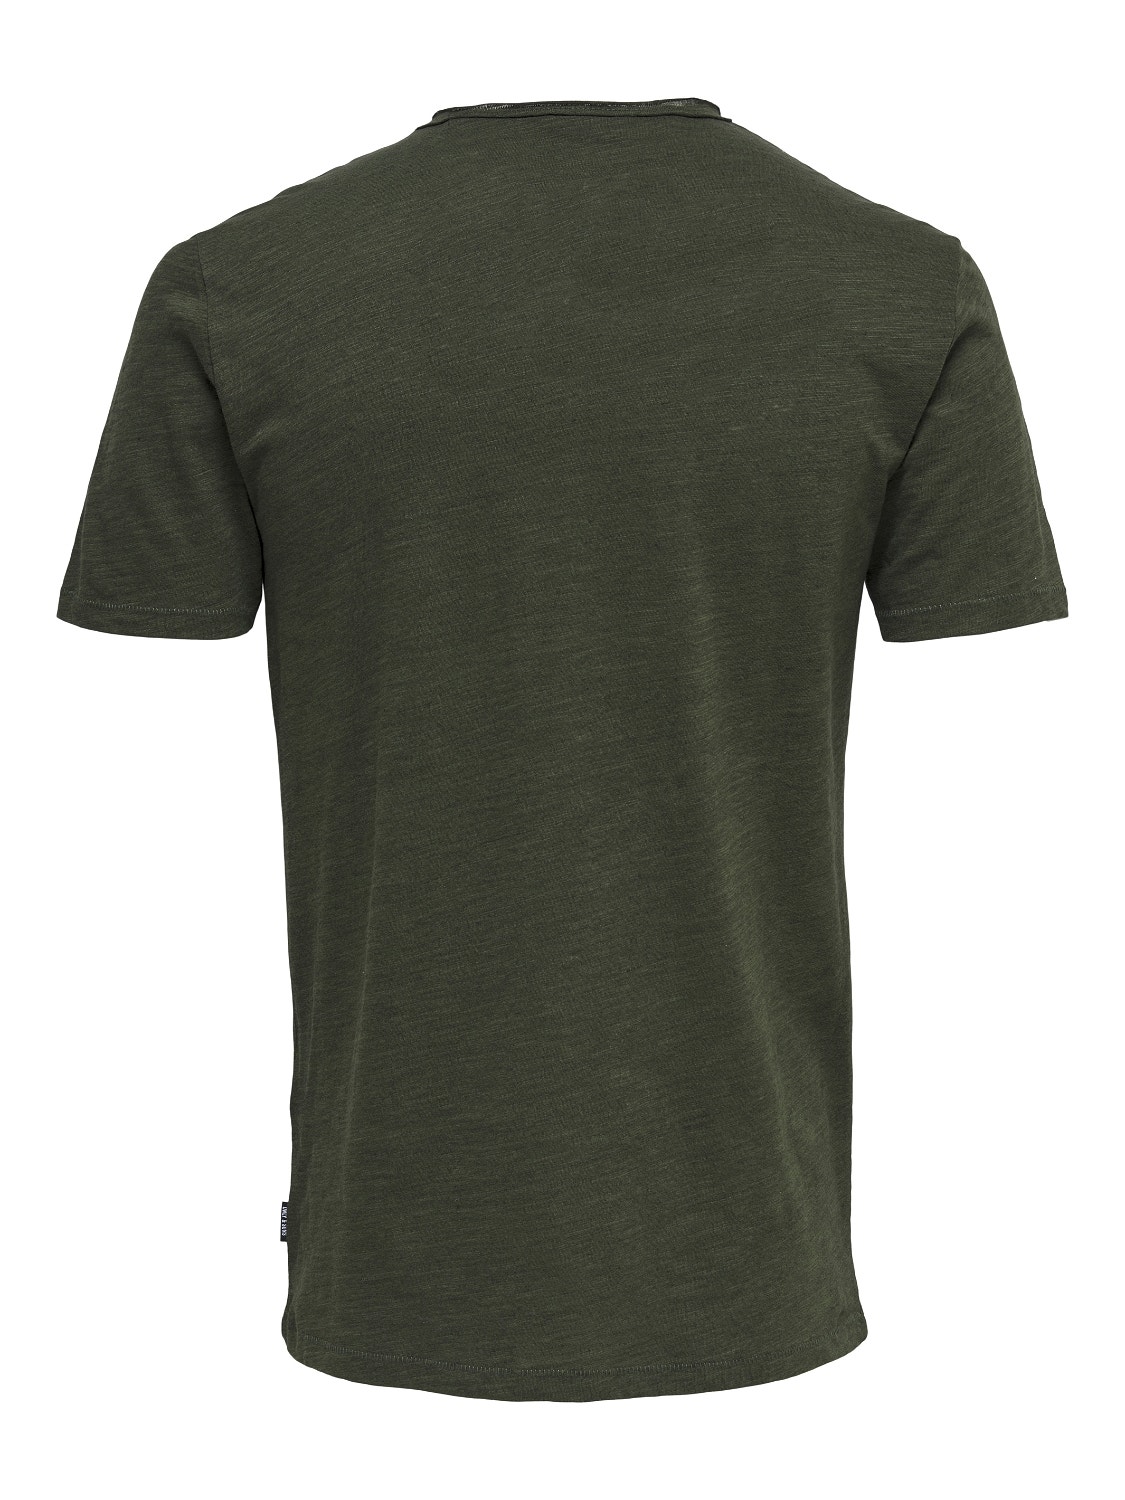 ONLY & SONS Normal geschnitten Rundhals T-Shirt -Forest Night - 22005108